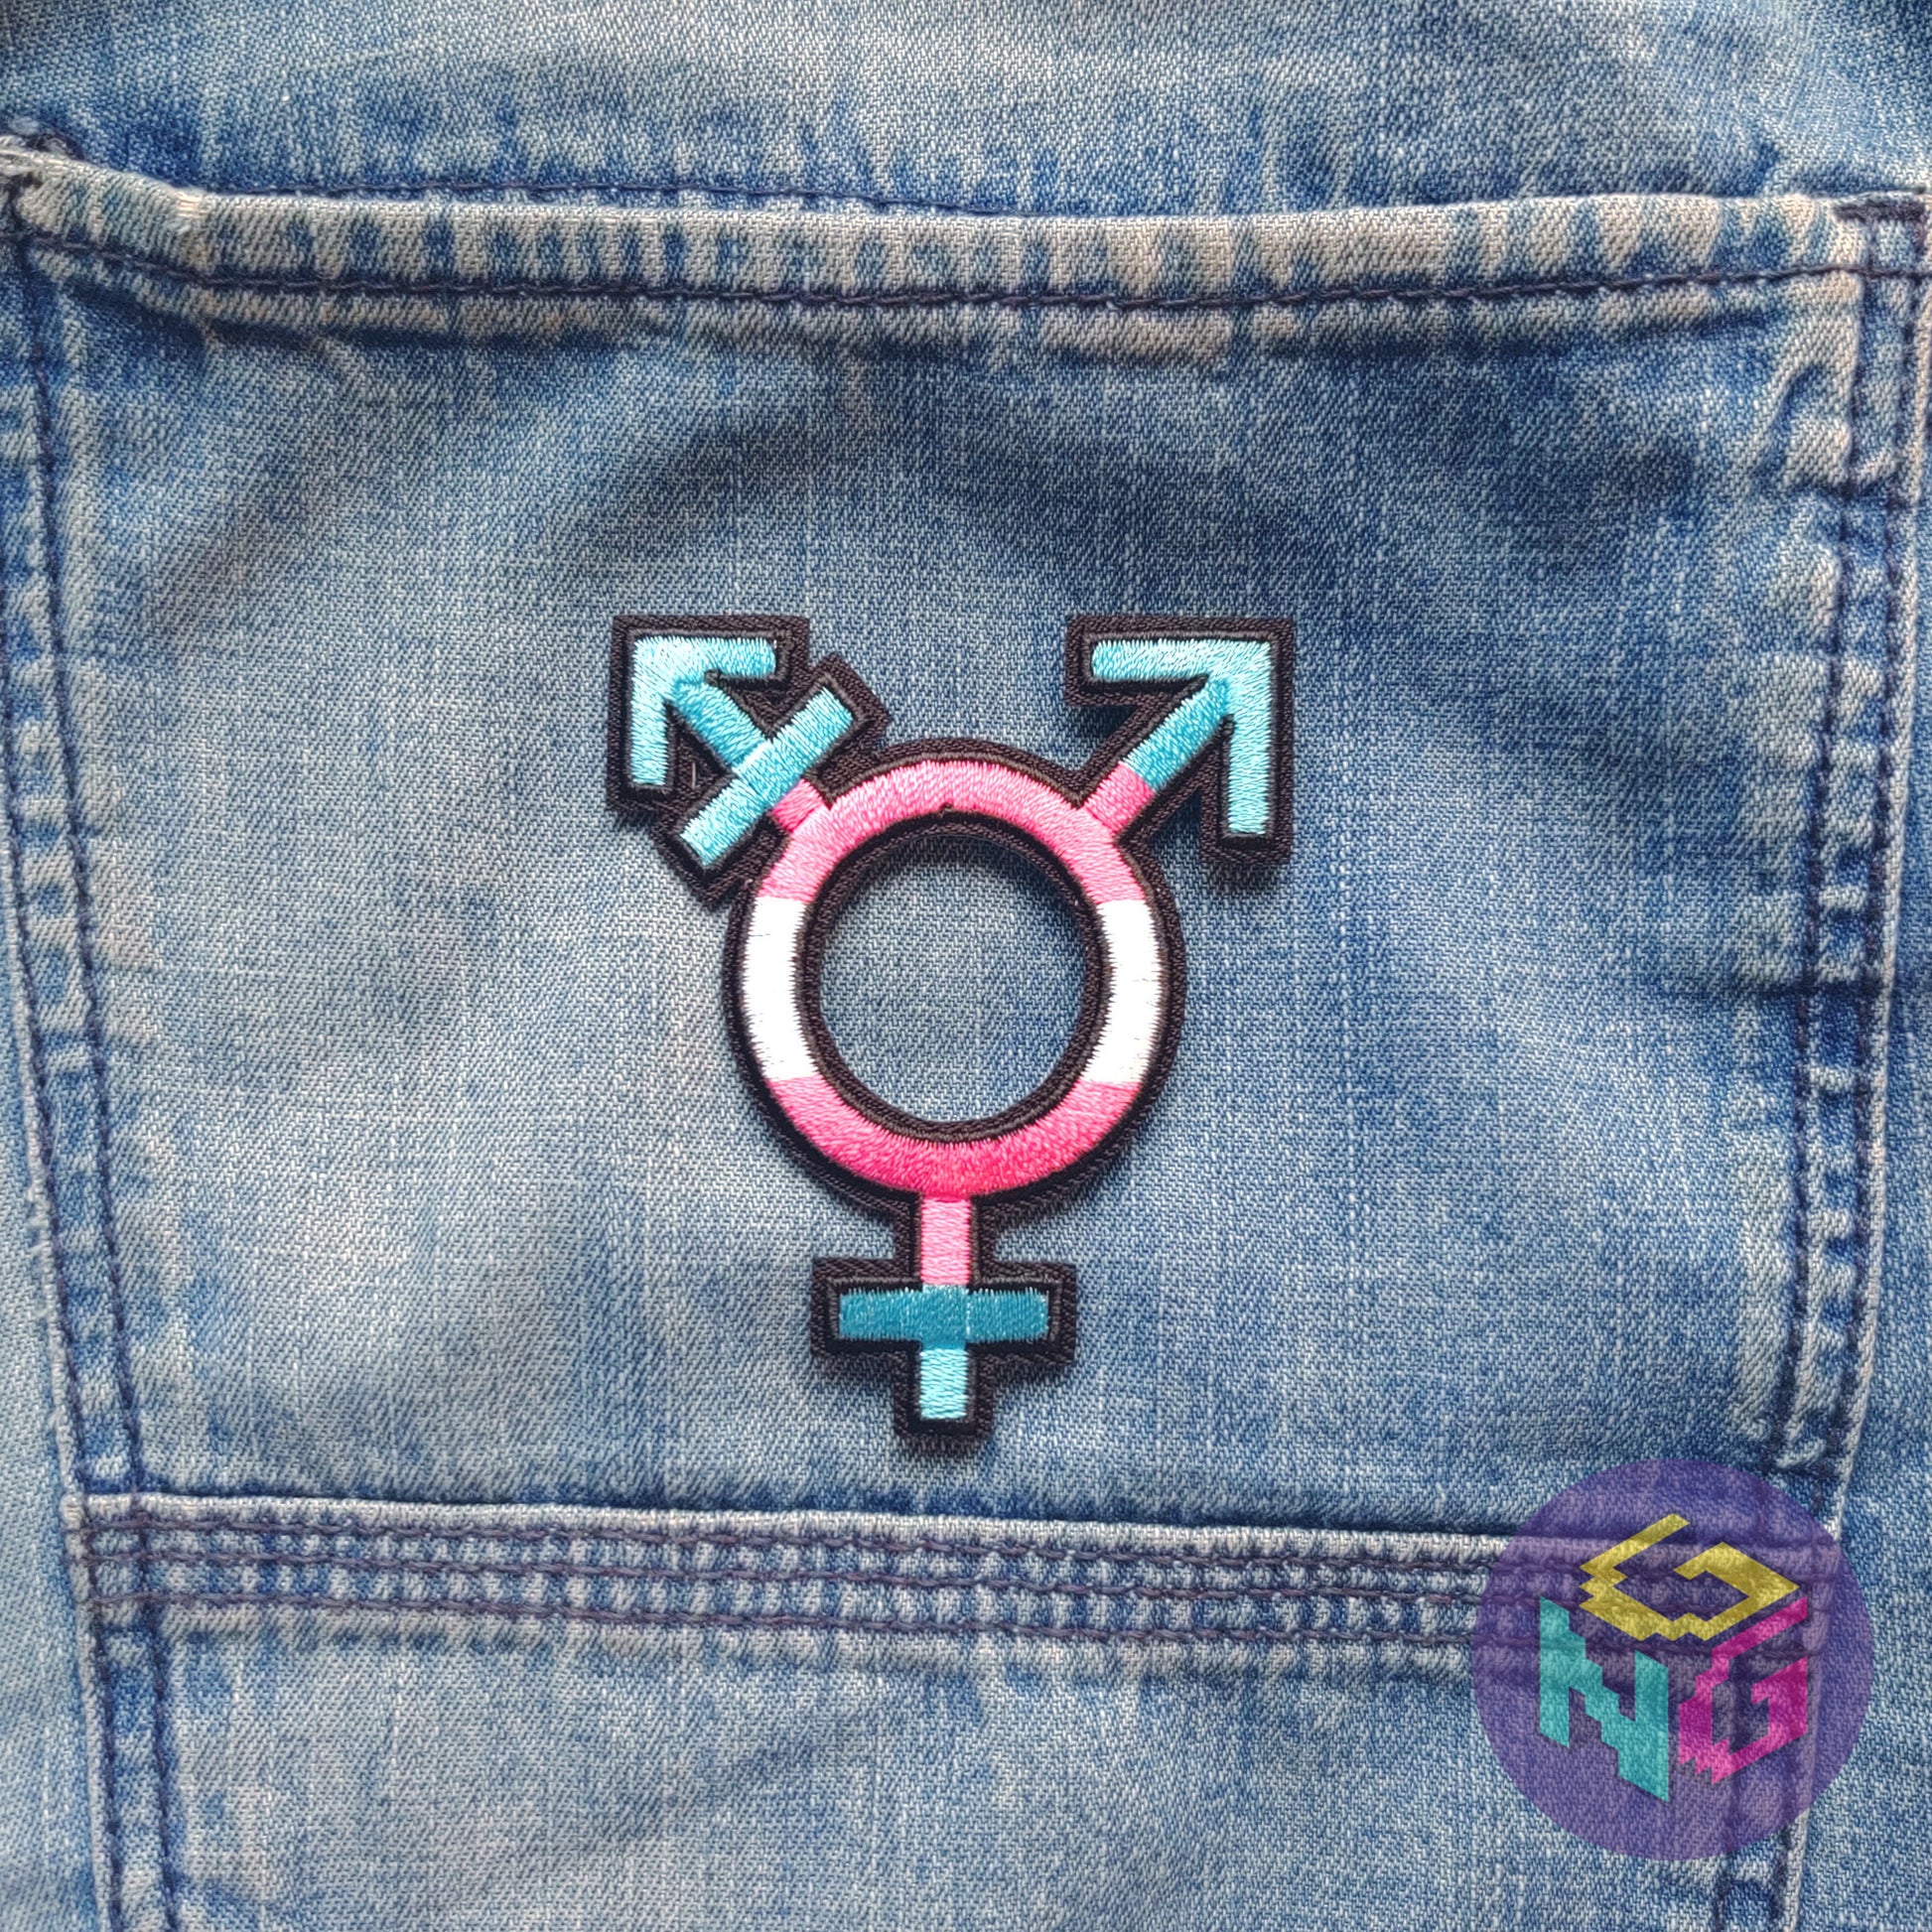 trans pride patch on denim jean background